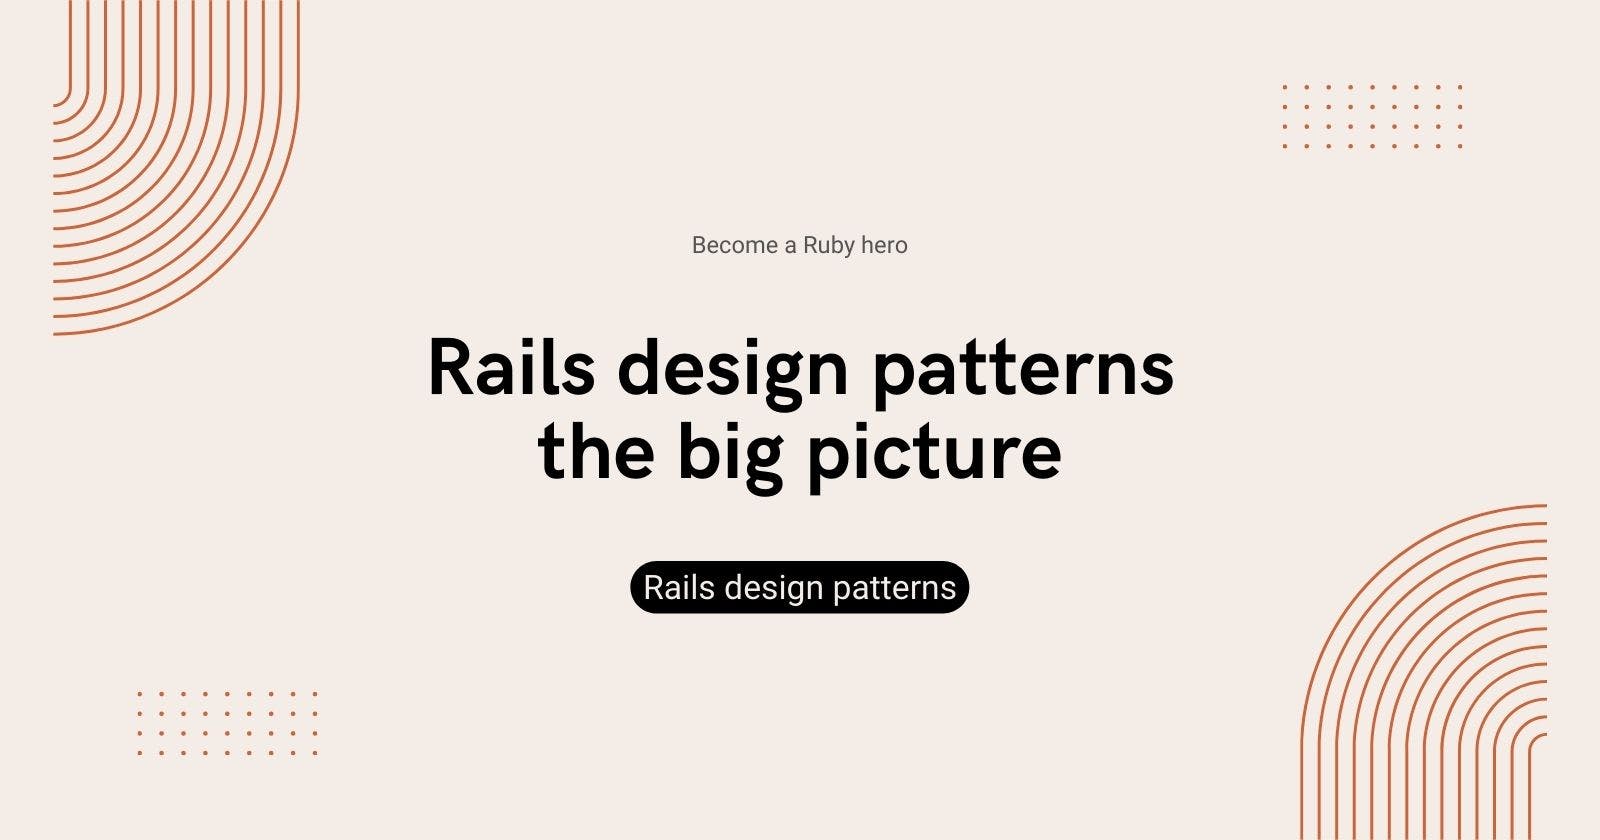 Rails design patterns